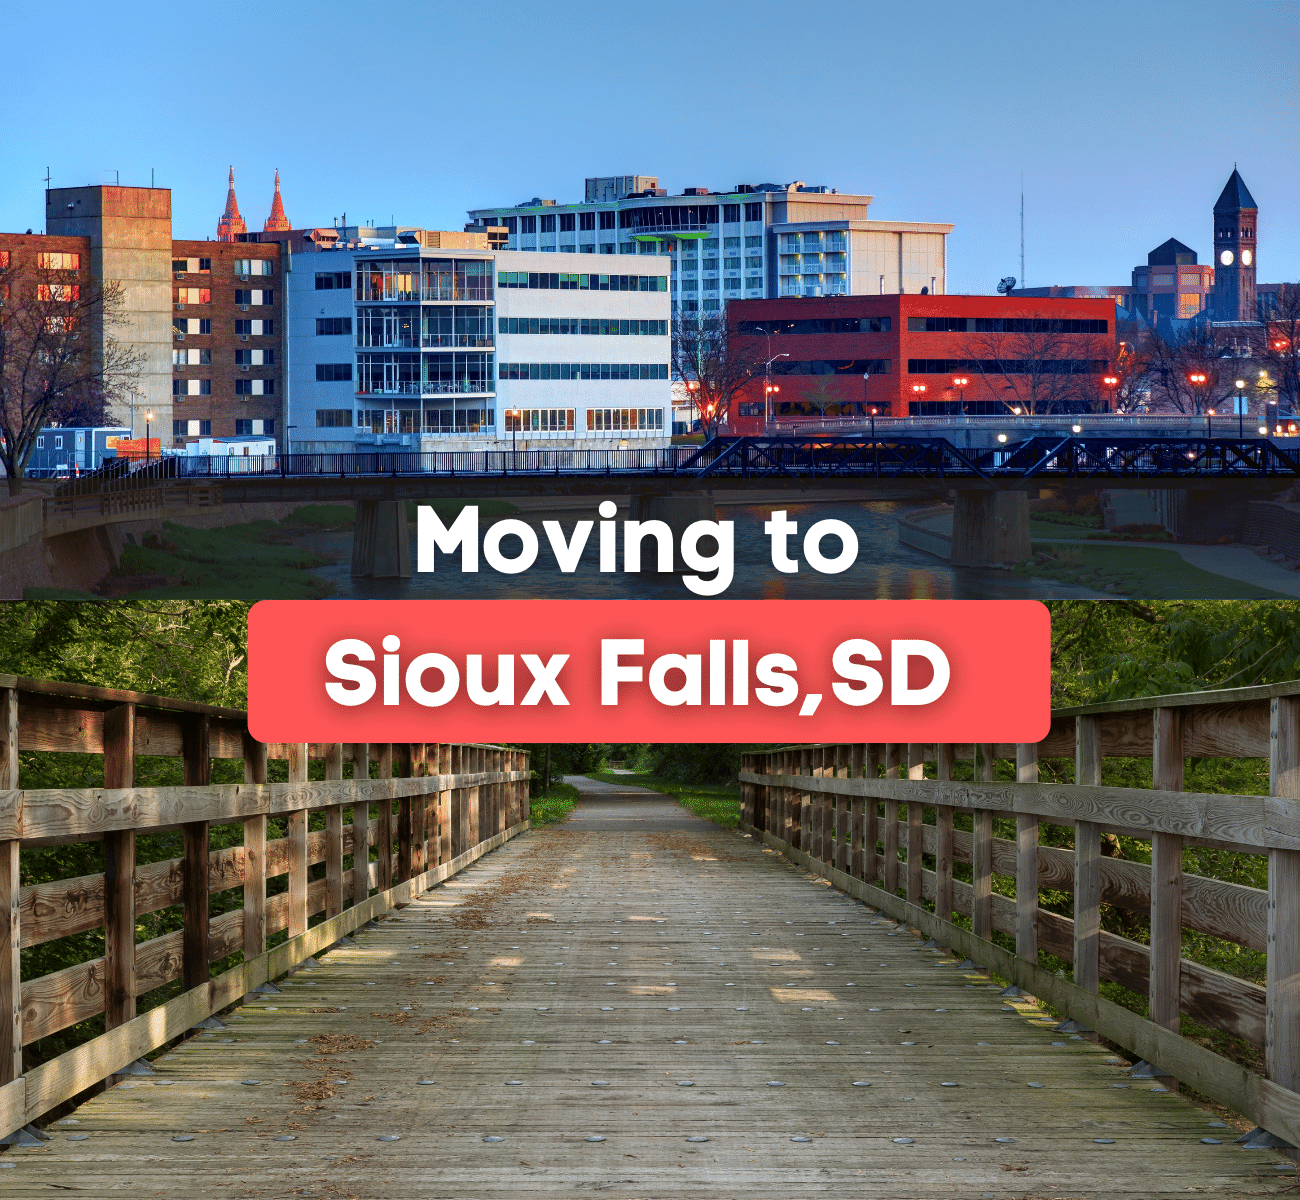 Sioux Falls, South Dakota skyline and walking trail